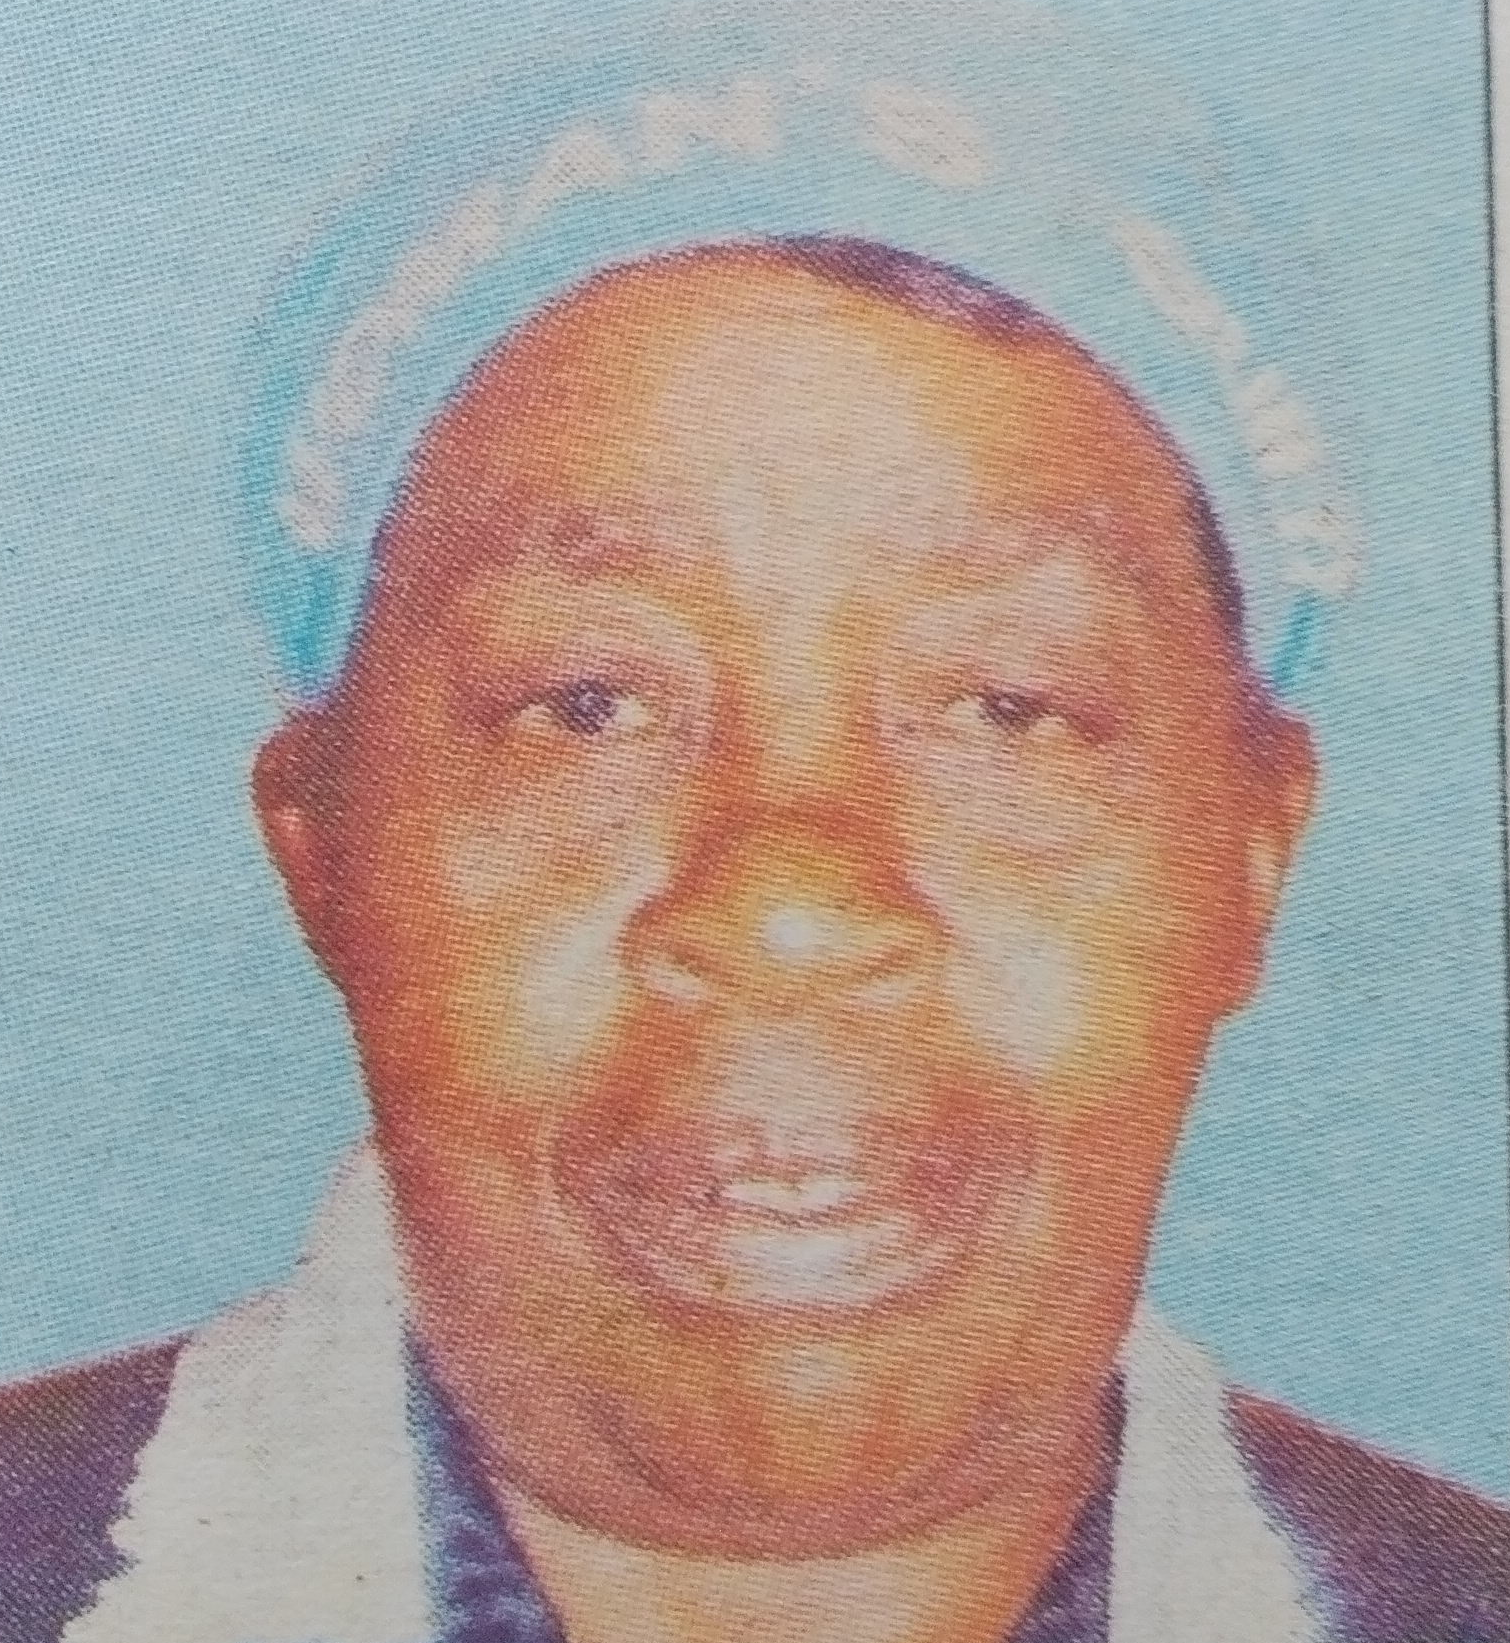 Obituary Image of Mary Nungari Gikau